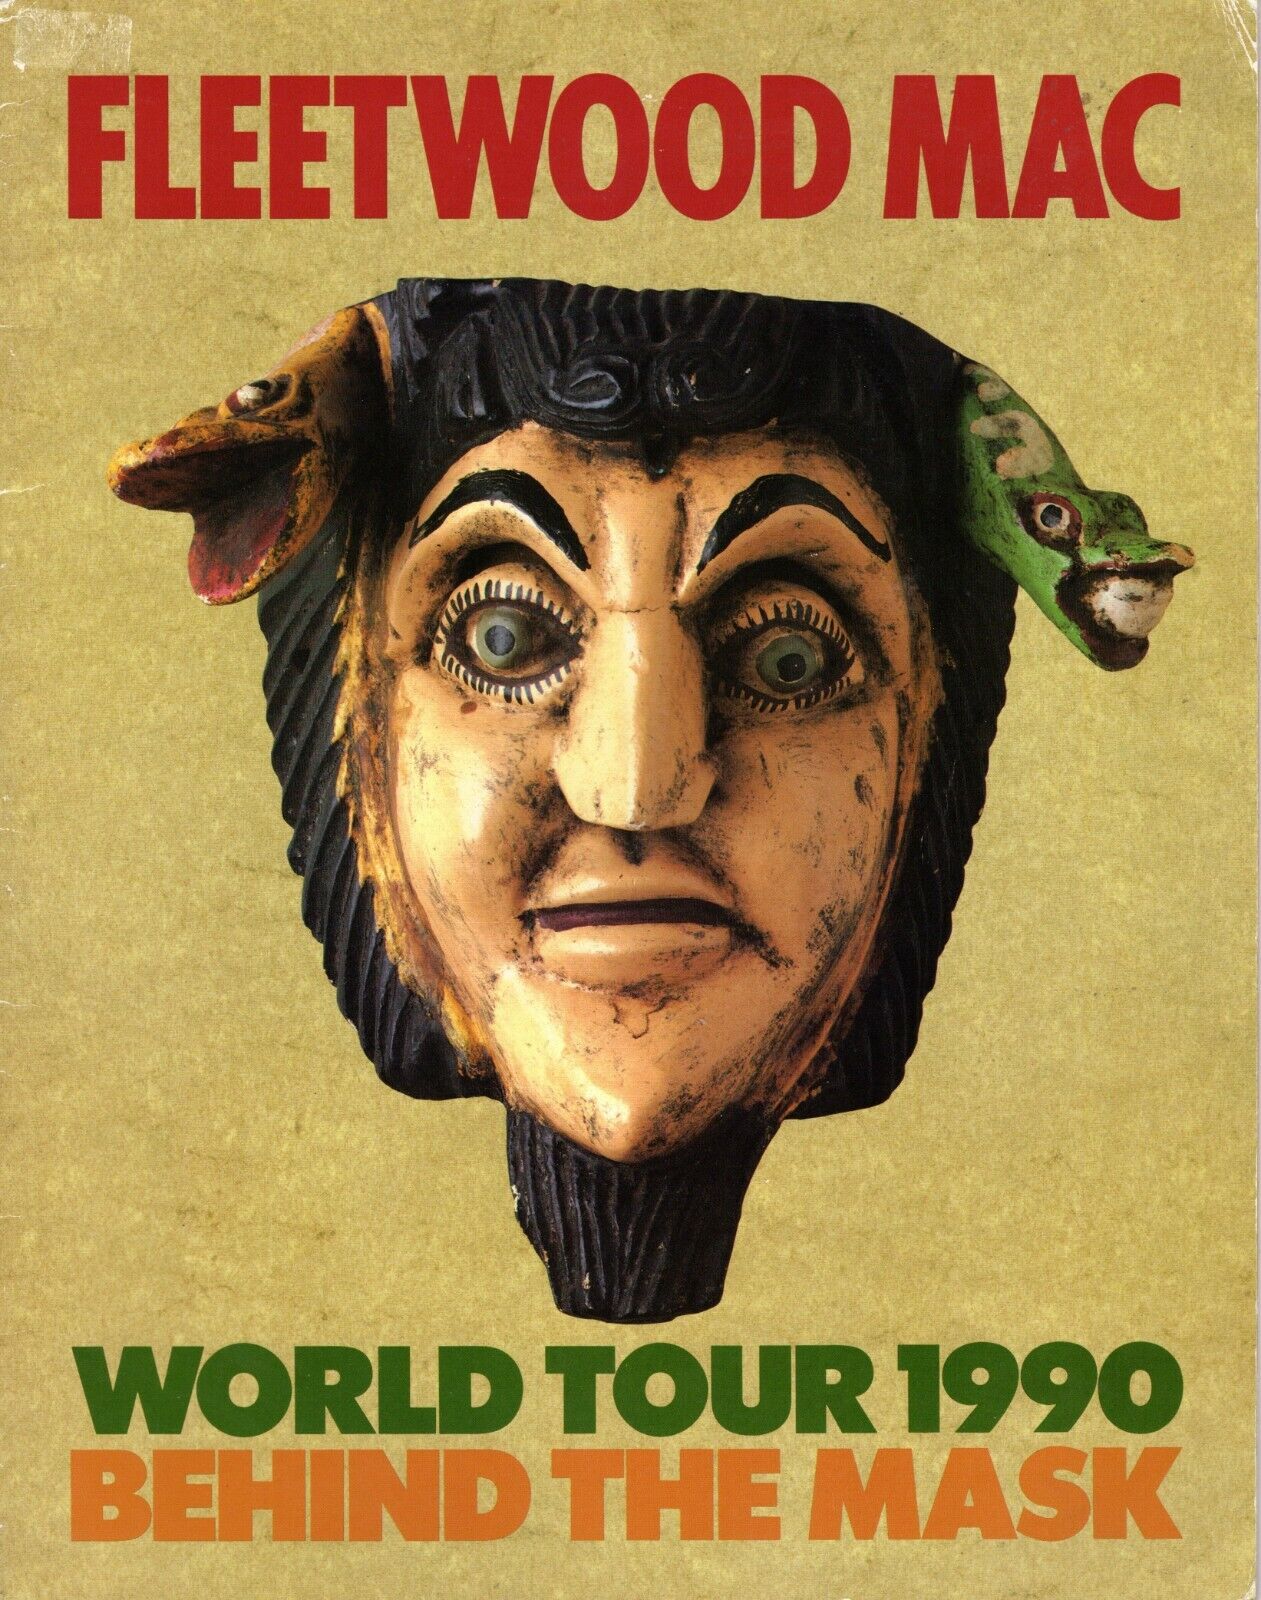 FLEETWOOD MAC 1990 BEHIND THE MASK TOUR CONCERT PROGRAM-NICKS- 2 BACKSTAGE PASS